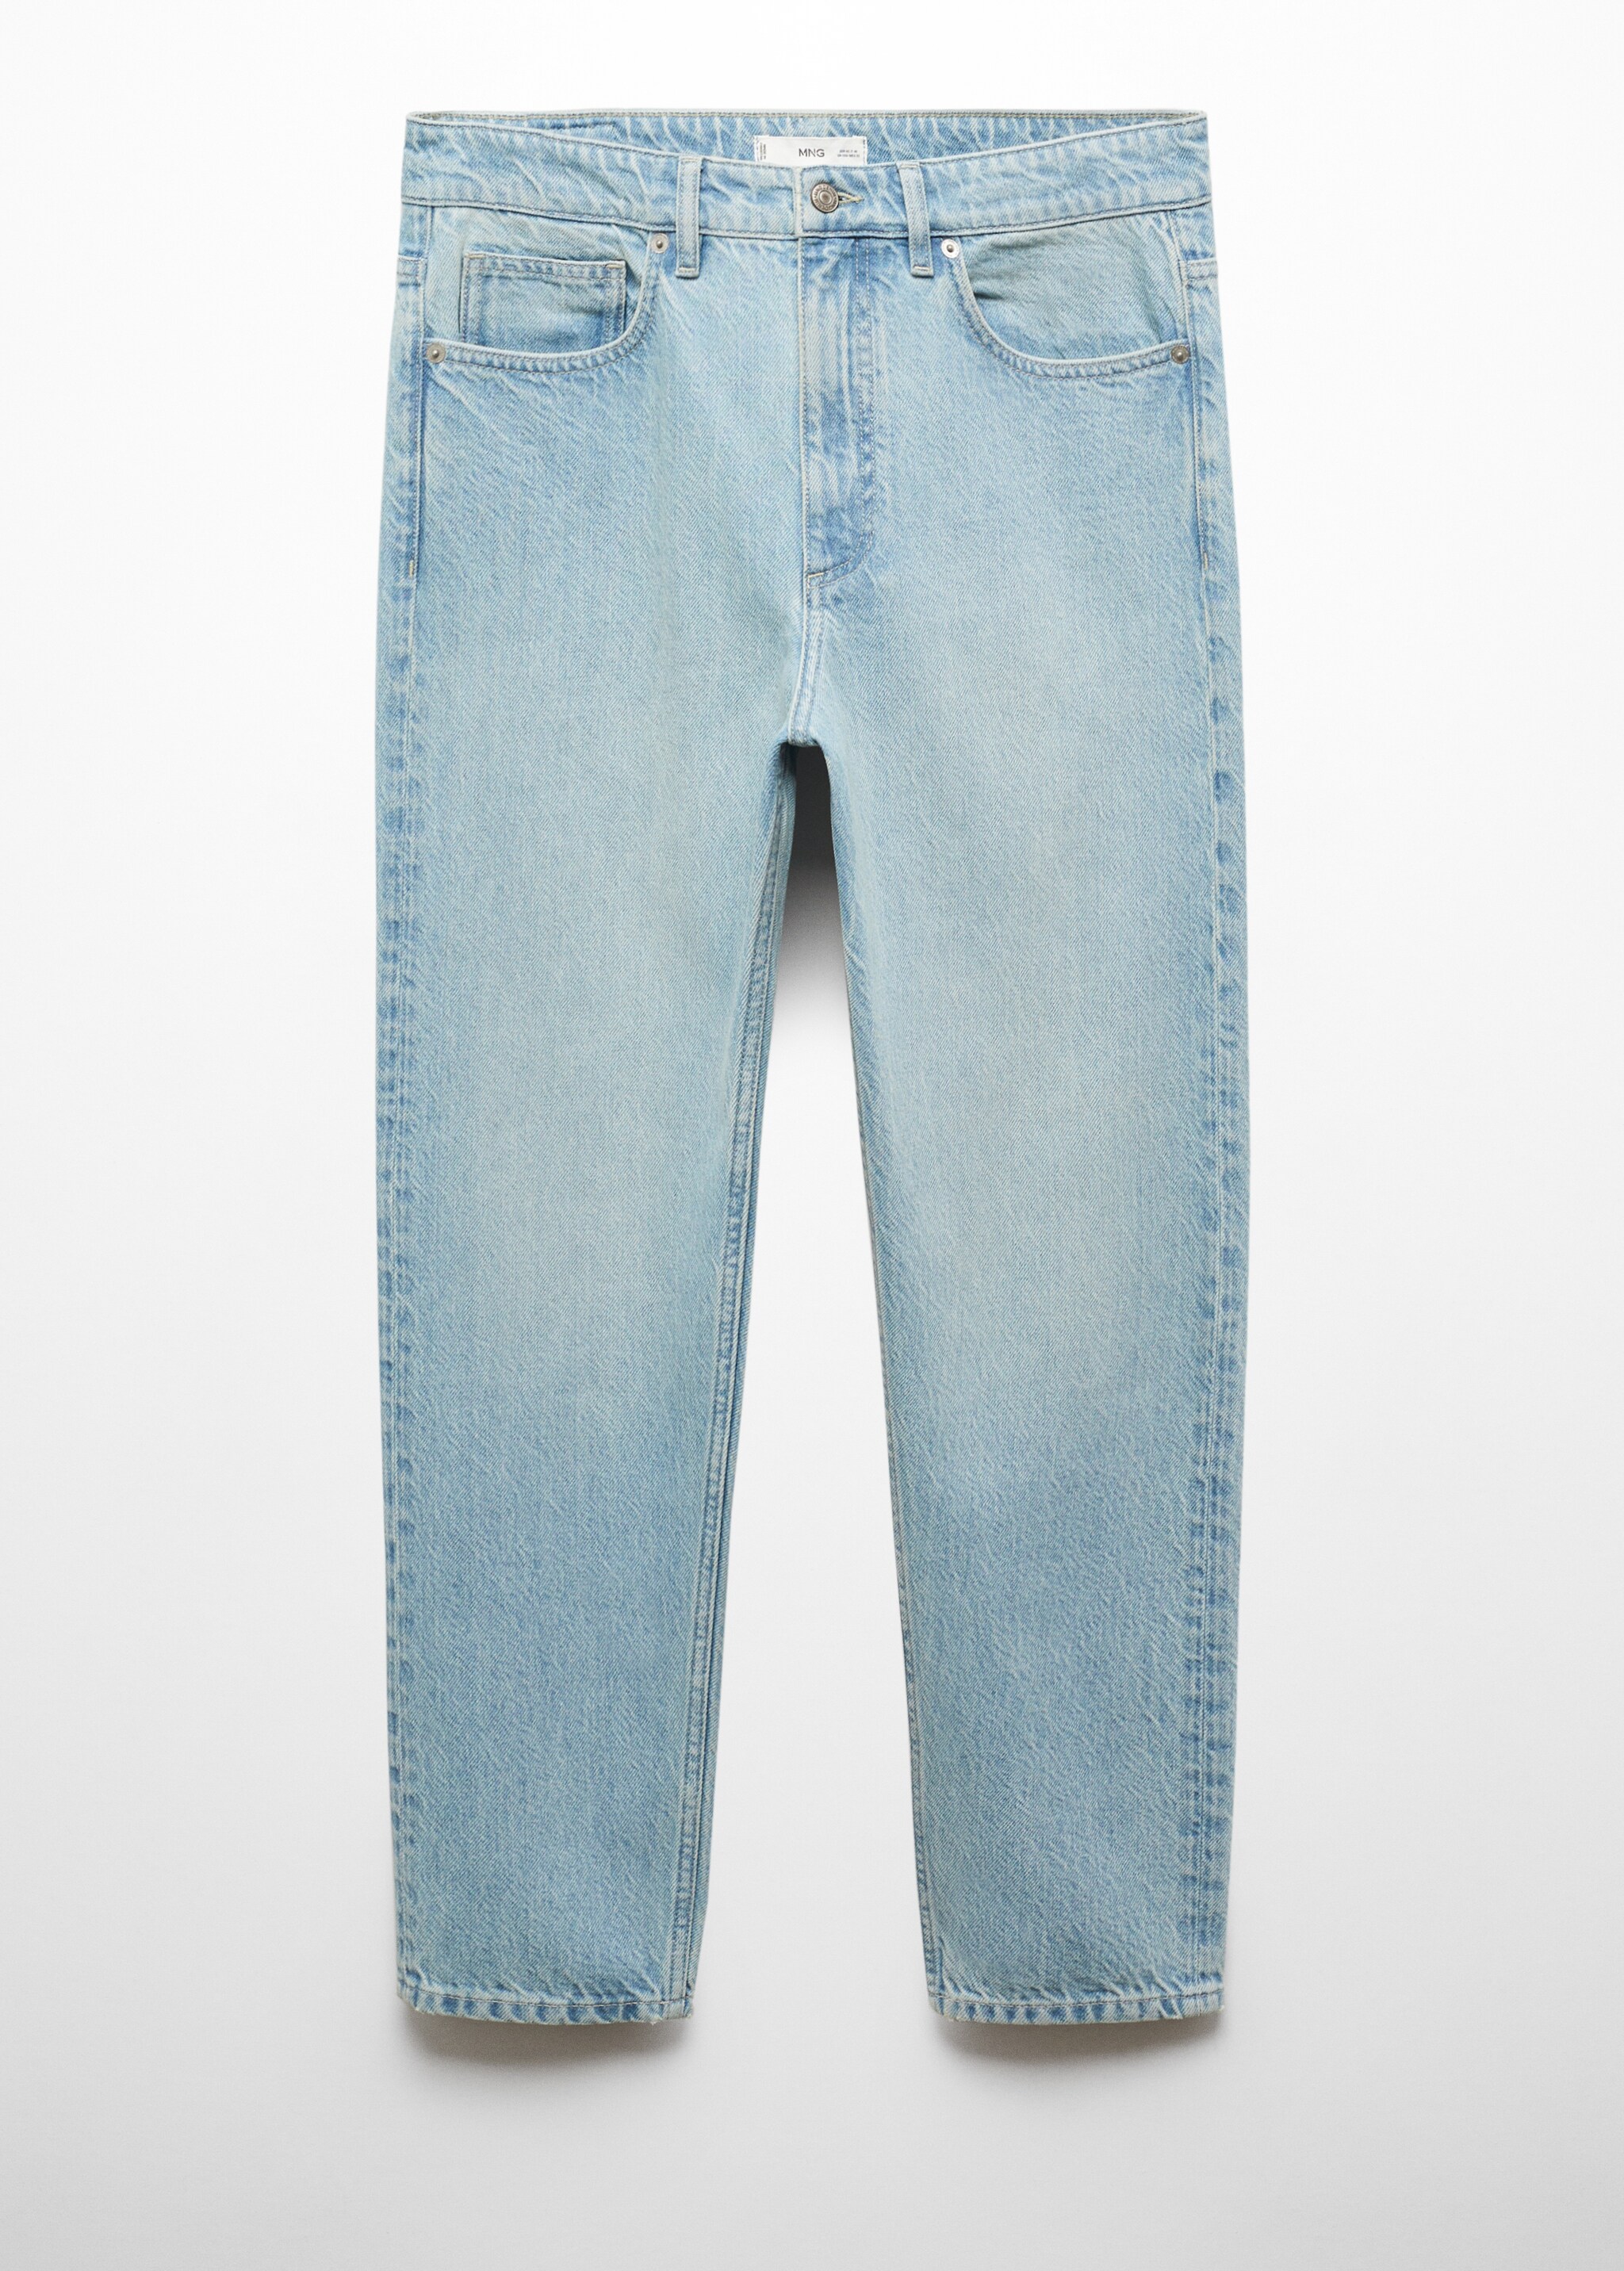 Jeans Sam tappered fit  - Artículo sin modelo